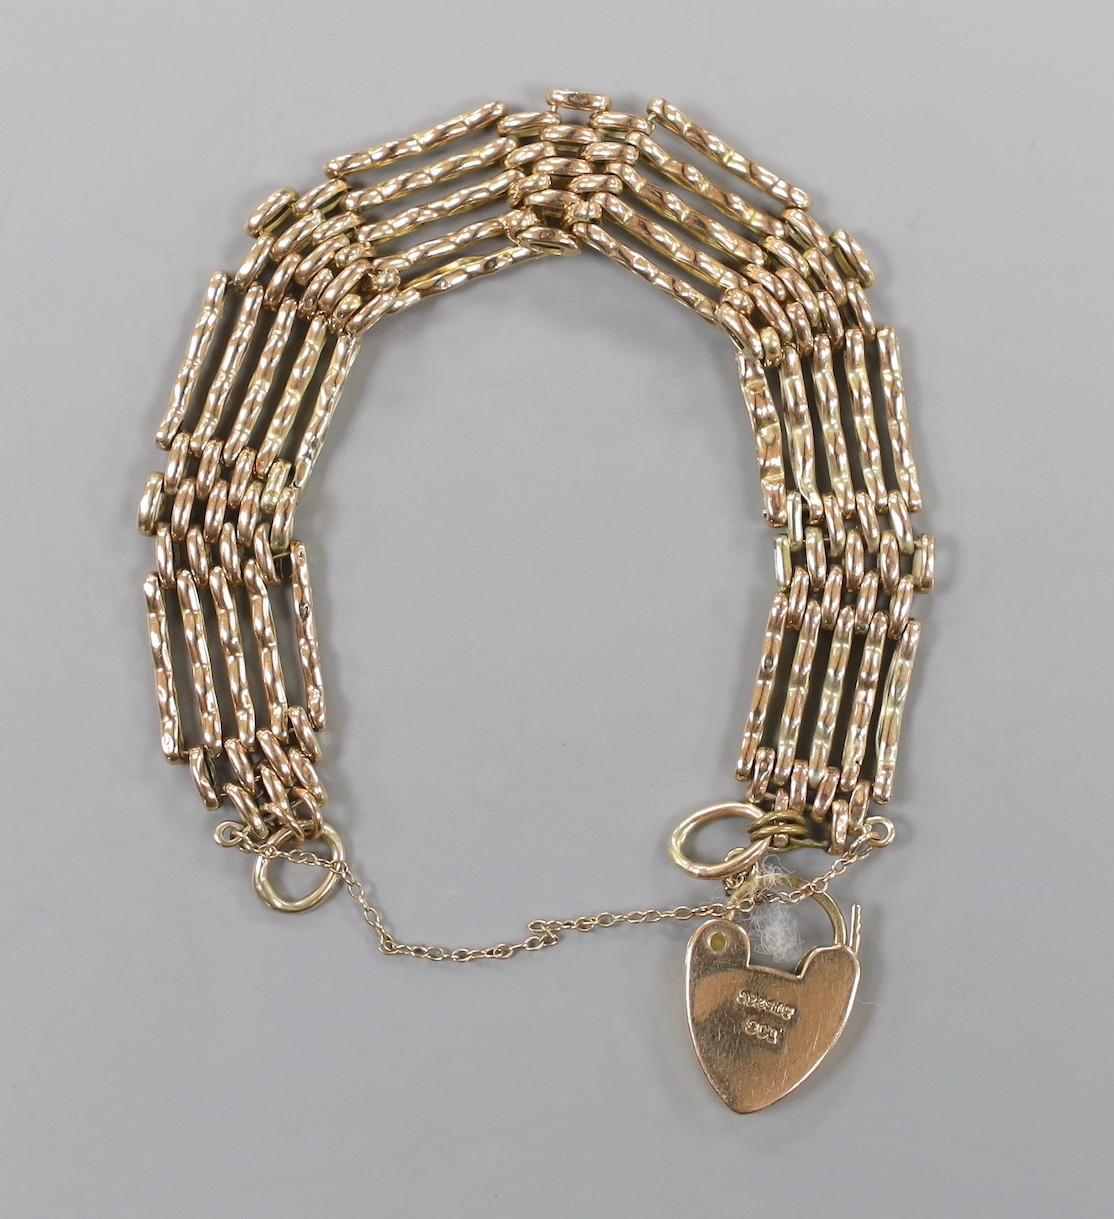 A 9ct gatelink bracelet, with heart shaped safety padlock, approx. 16cm, 13.7 grams.